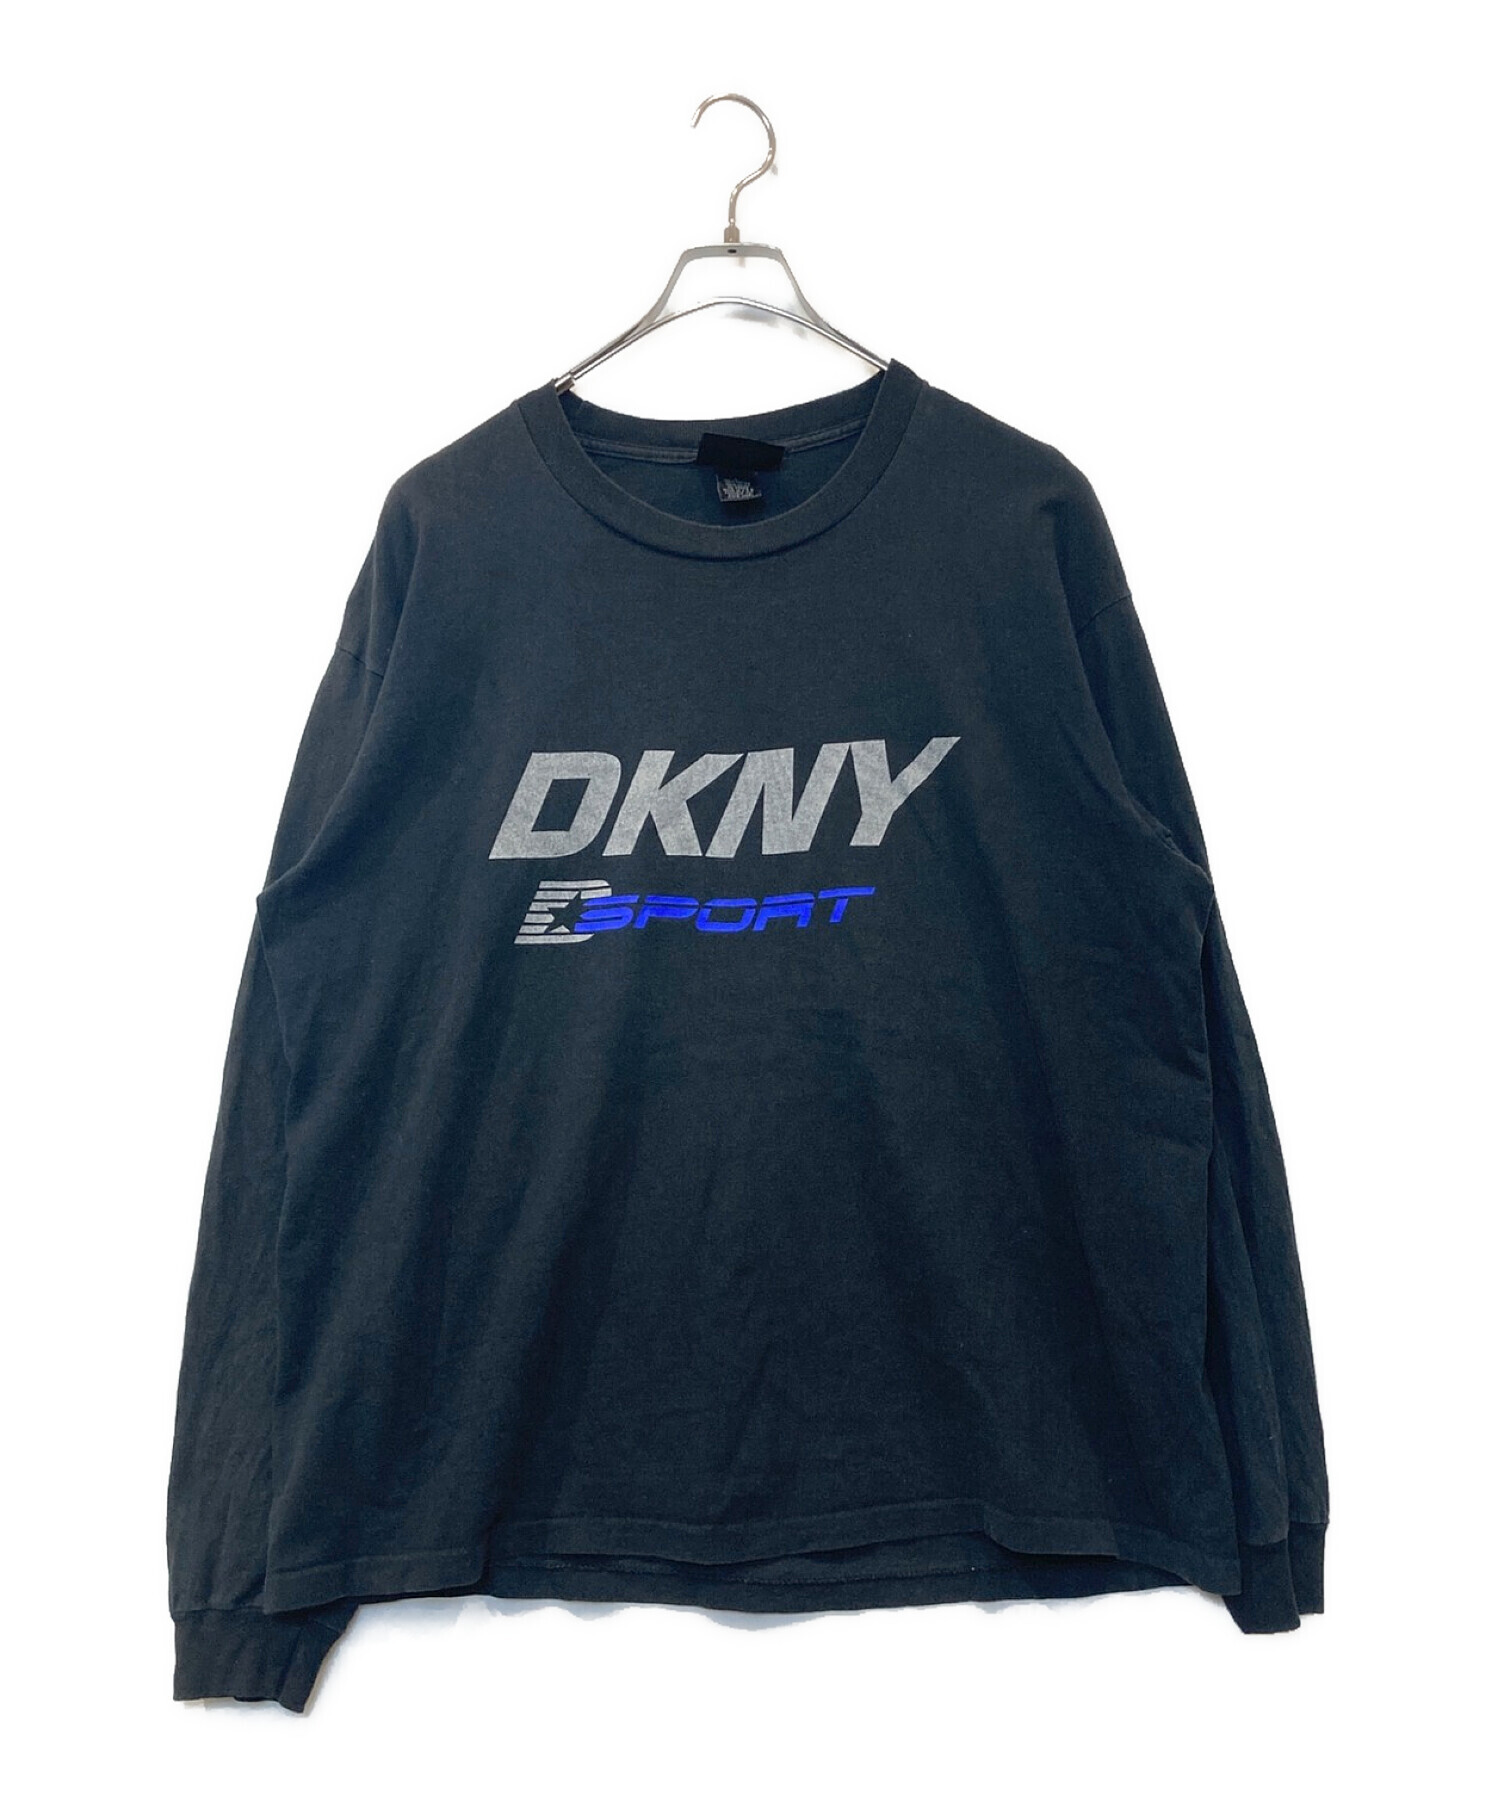 DKNY (ダナキャランニューヨーク) ロンT ブラック サイズ:L